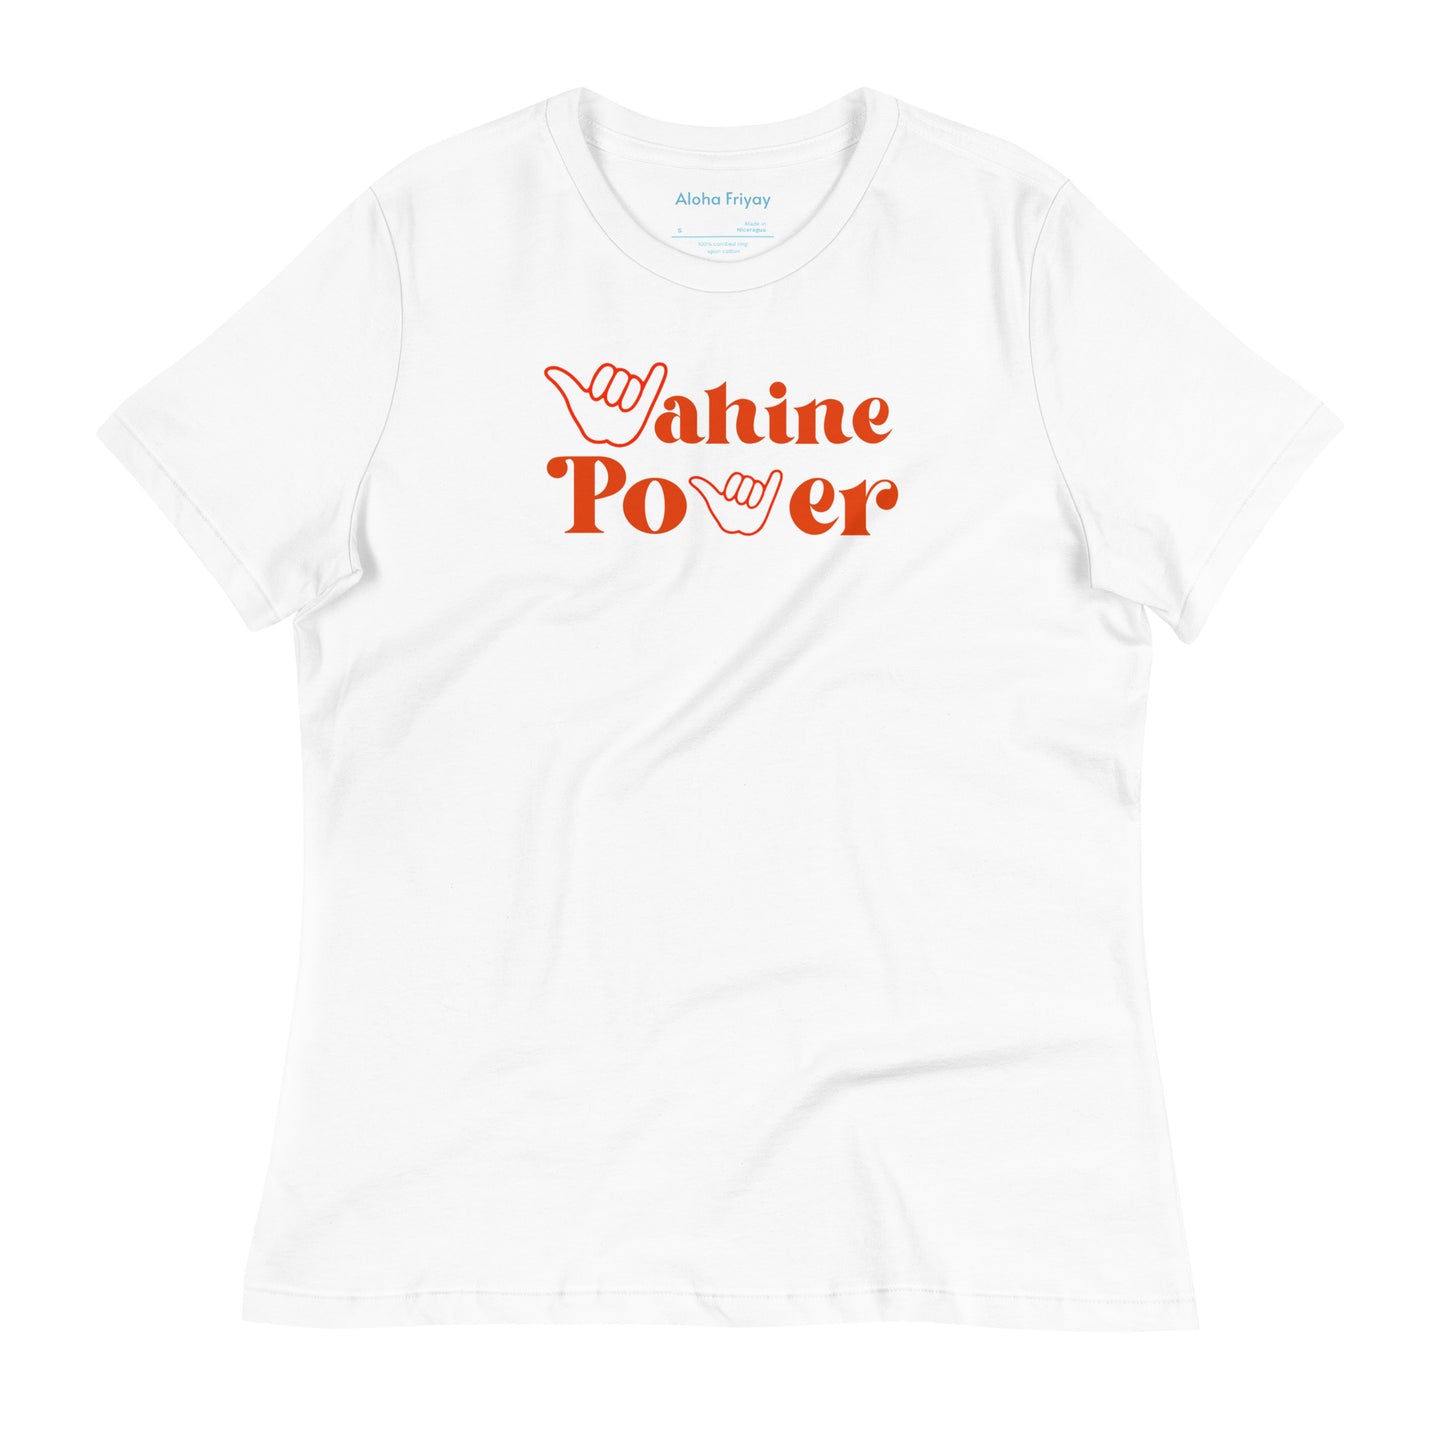 Wahine Power Women's Relaxed T-Shirt